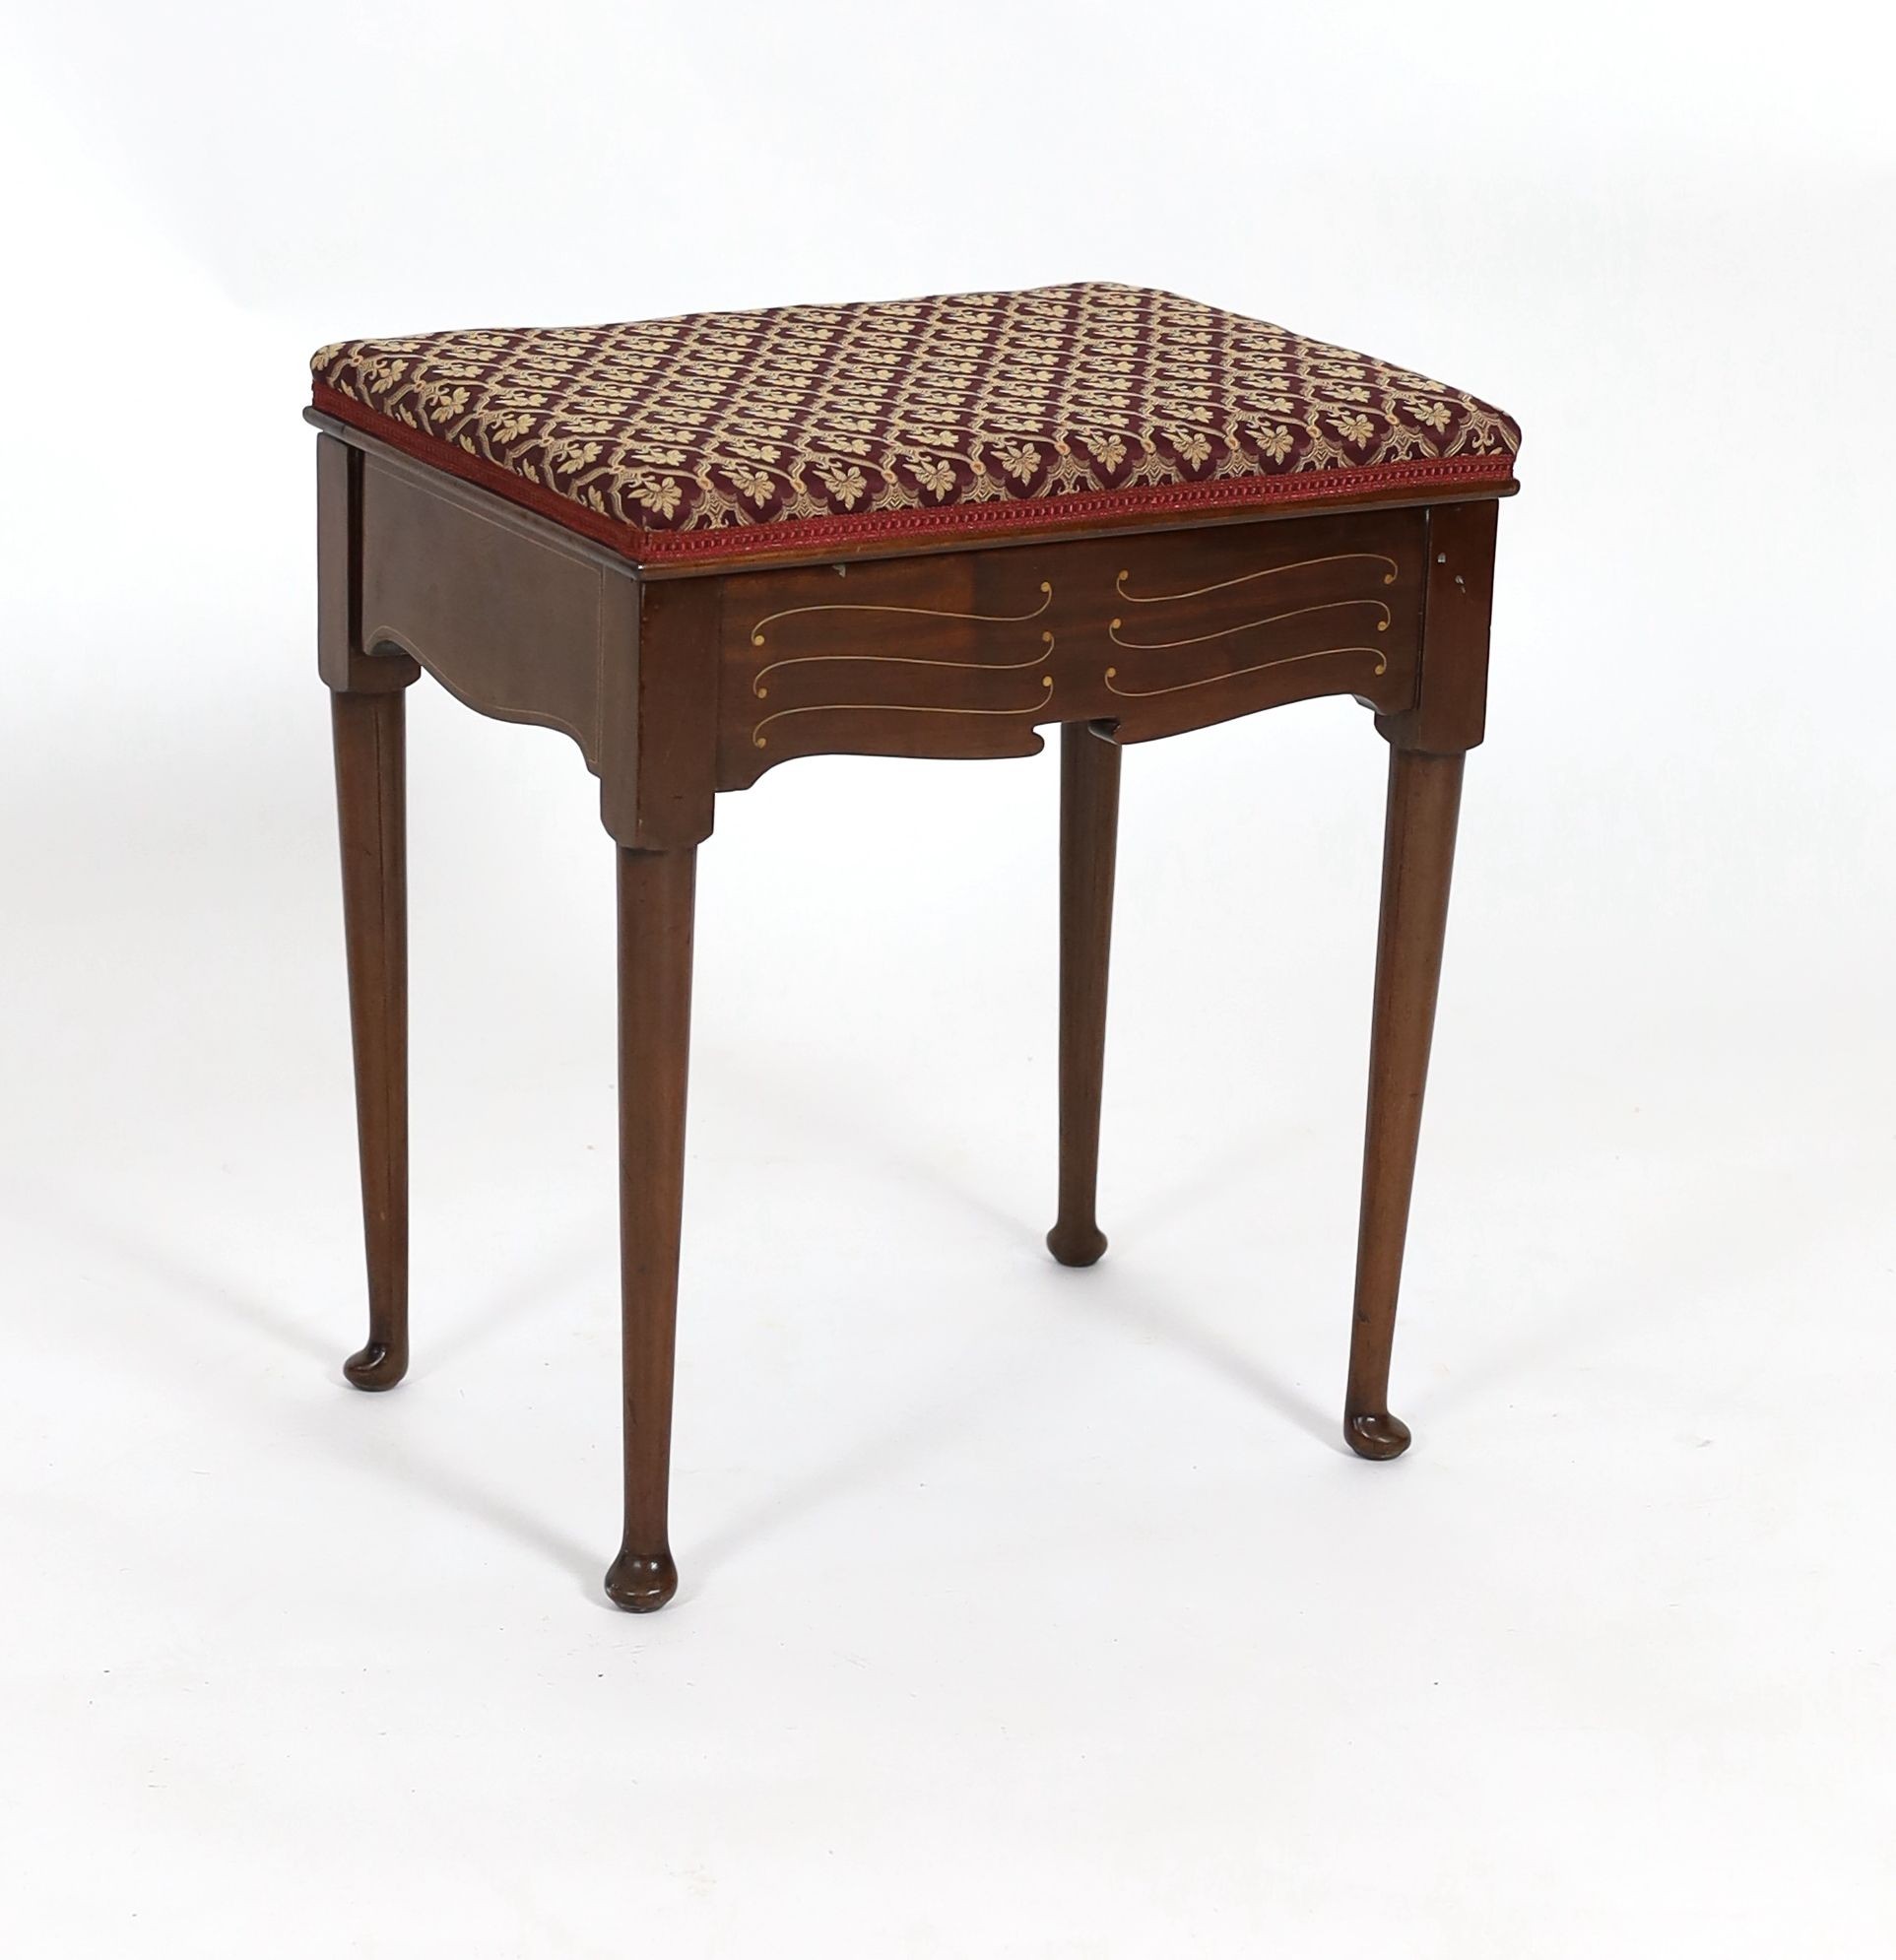 An Edwardian inlaid mahogany upholstered box stool piano stool, width 45cm depth 36cm height 53cm